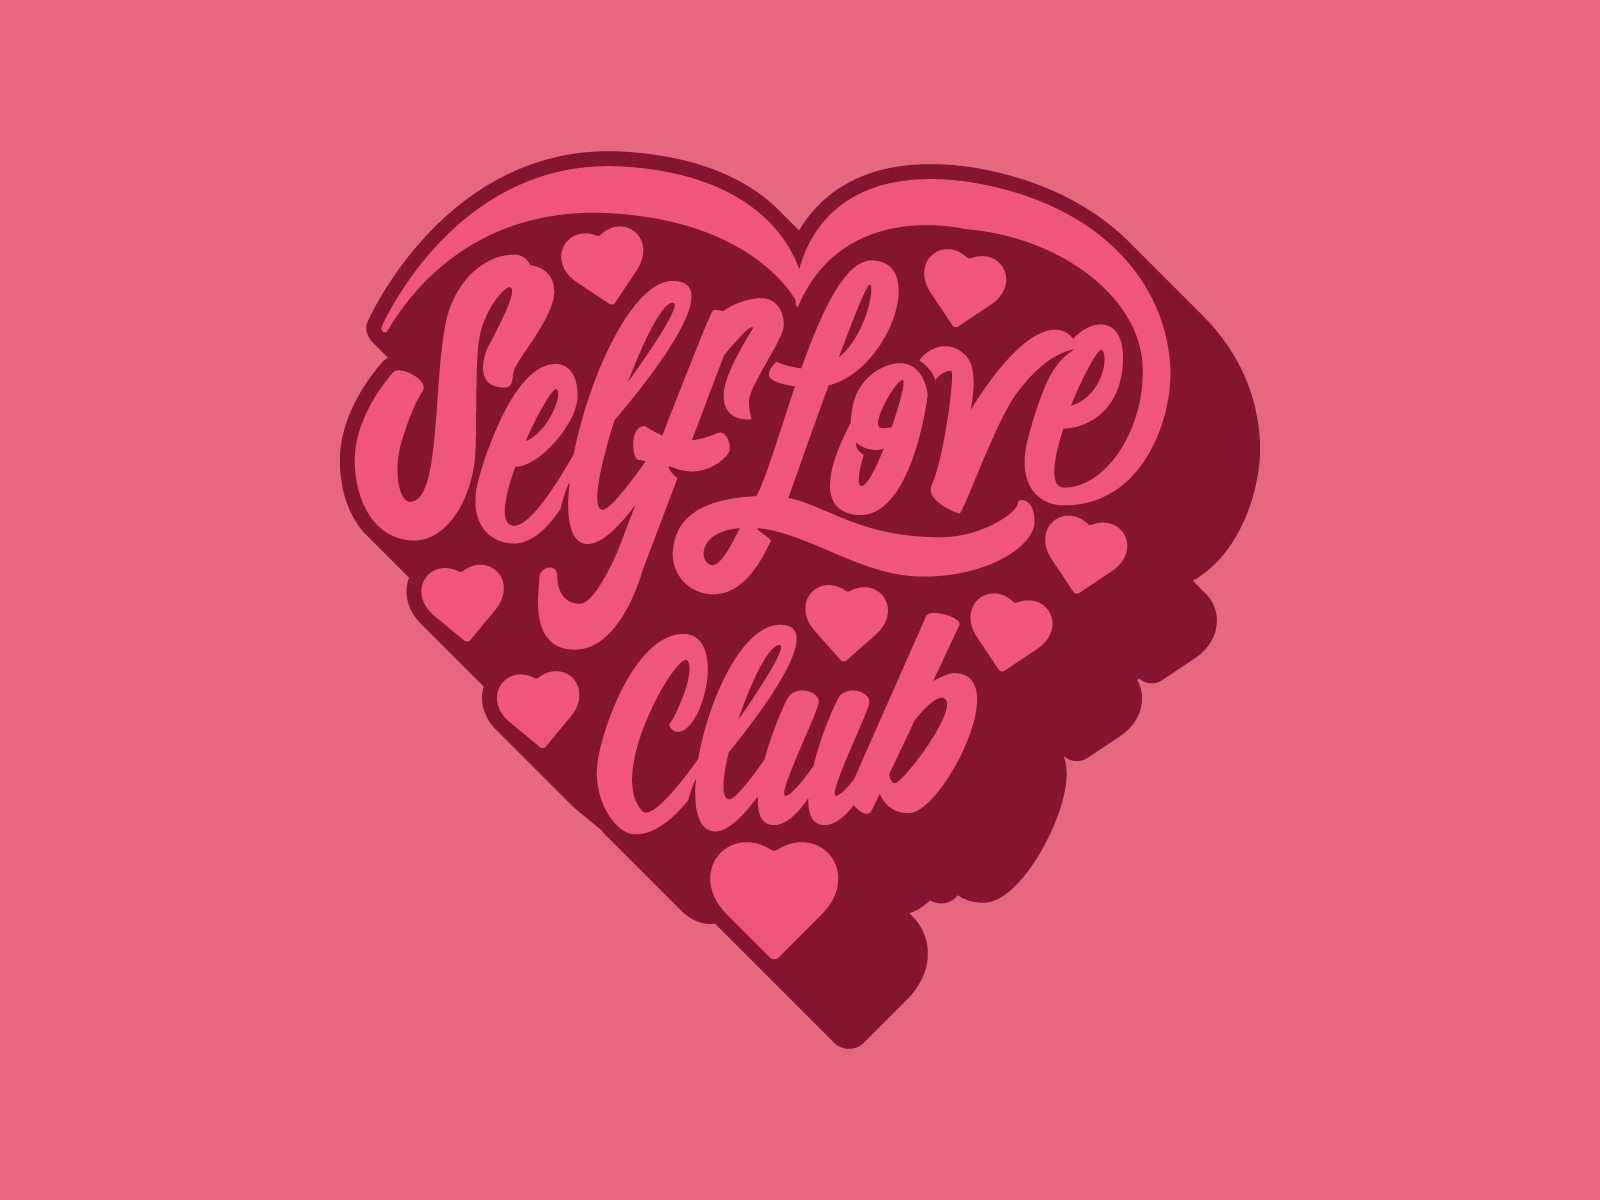 Love club digit